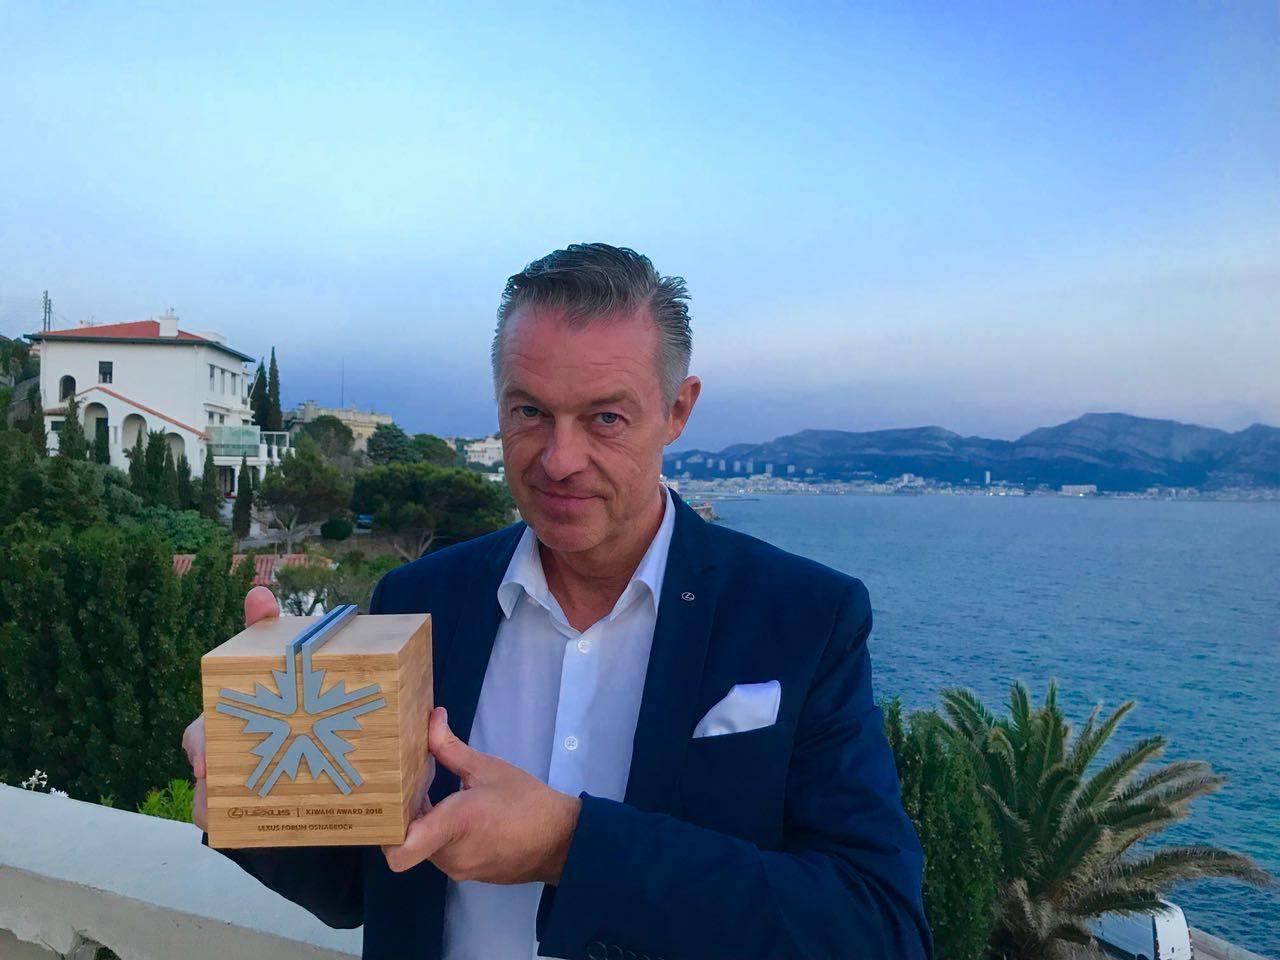 Andreas Stege hält den Lexus Kiwami Award